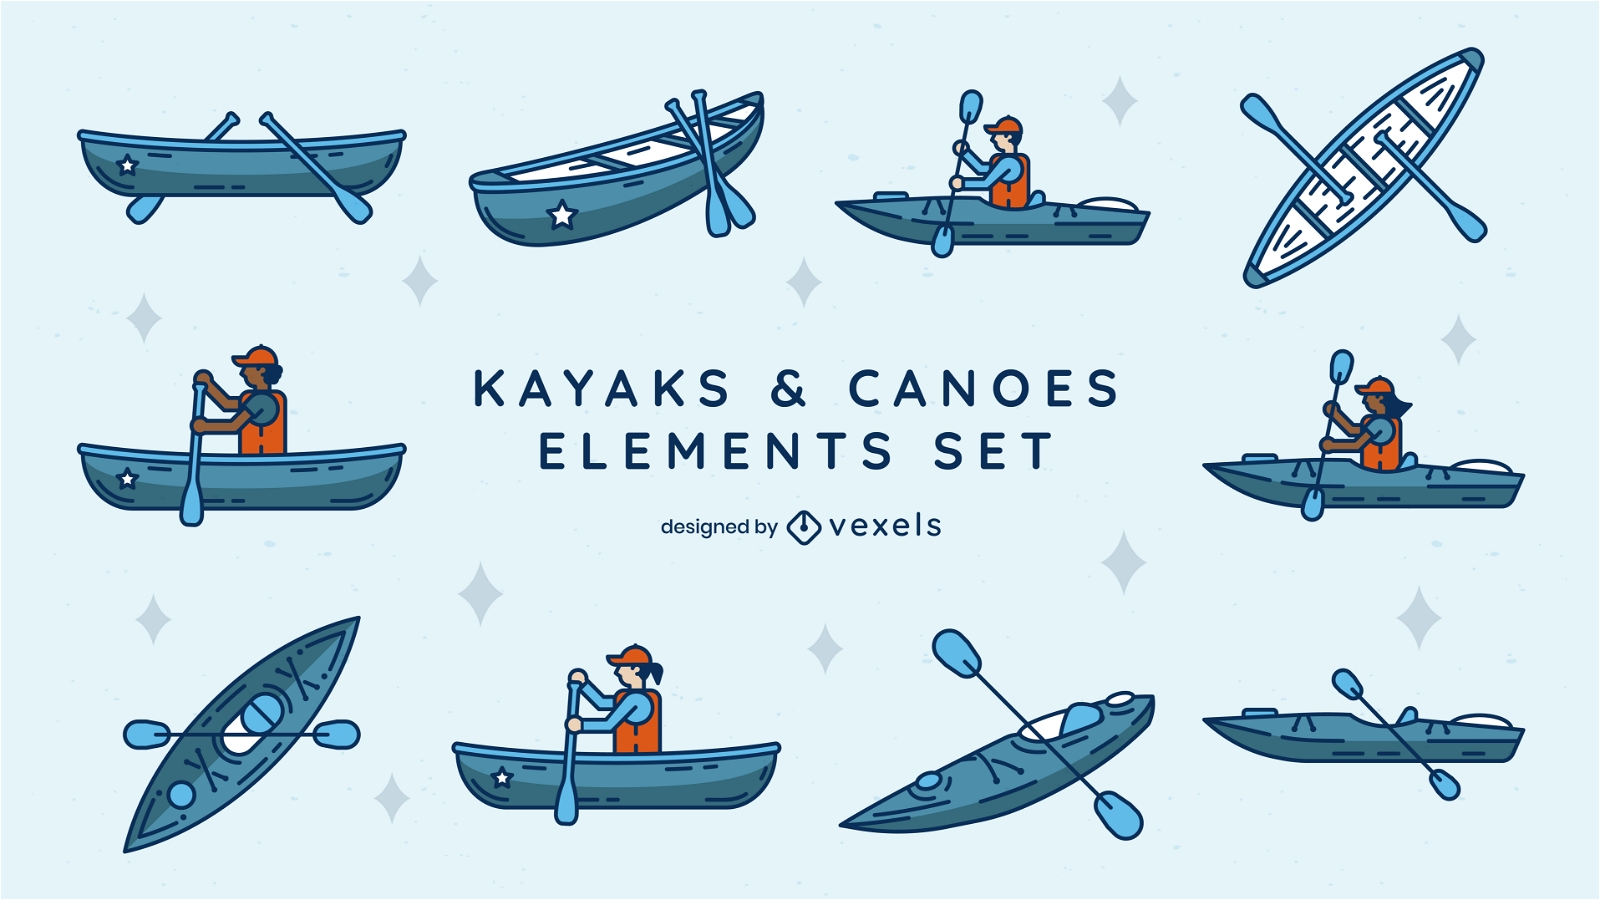 Kayaks and canoes elements set